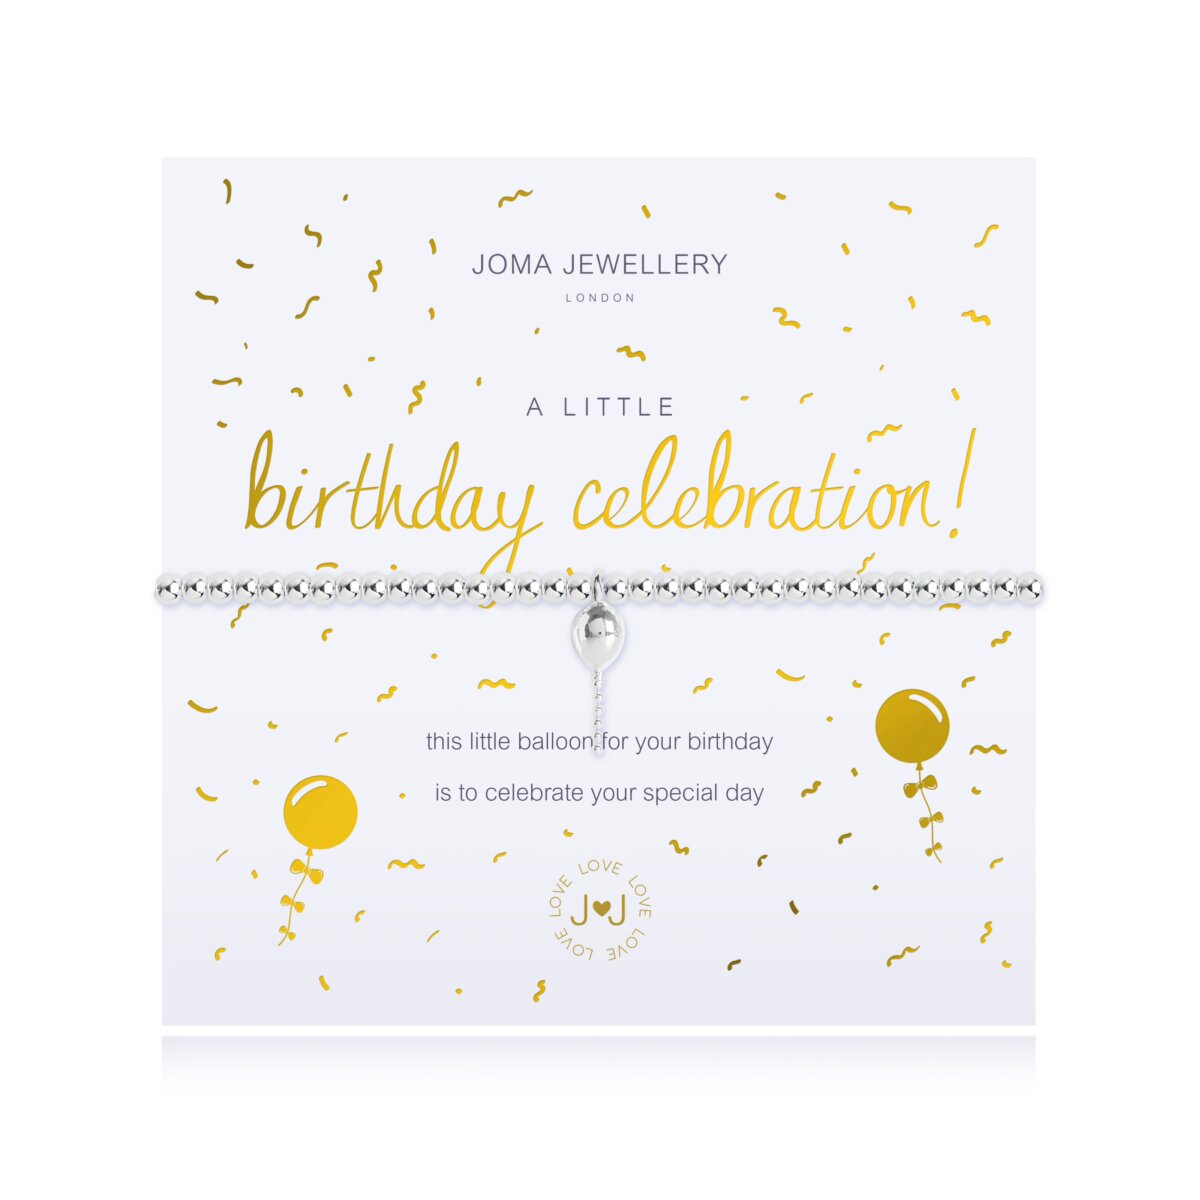 Joma Jewellery 'A Little' Birthday Celebration